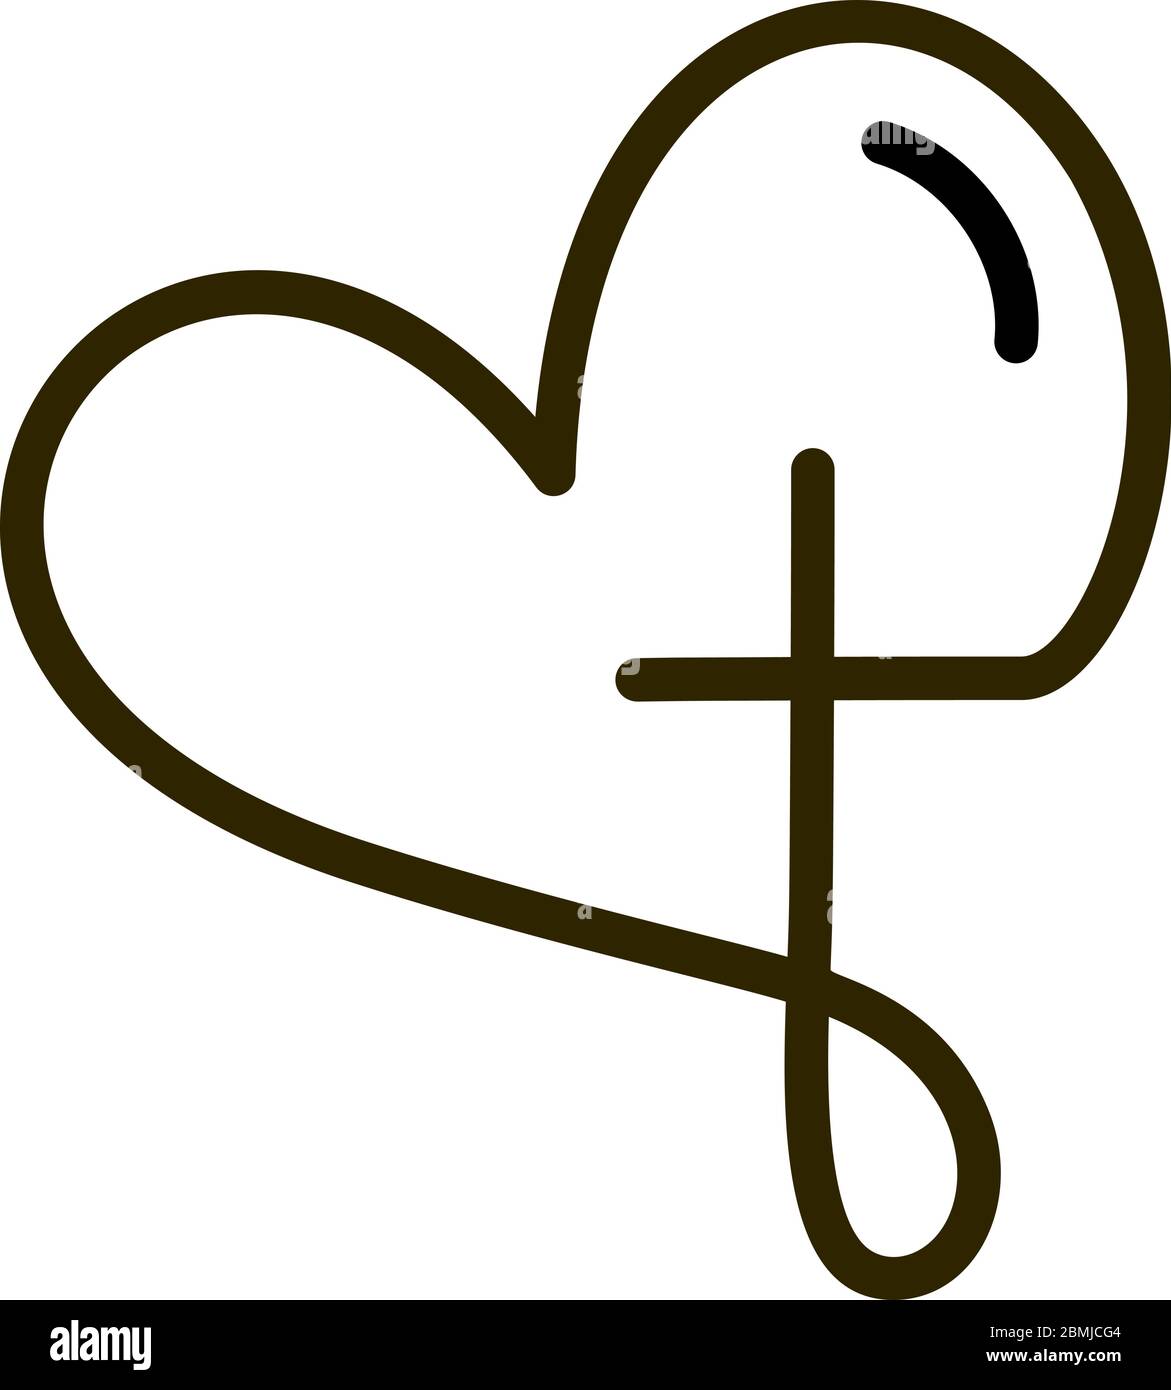 Abstrakte religiöse Kreuz und Herz-Ikone. Logo „Christian love“. Monoline Vektorgrafik Stock Vektor